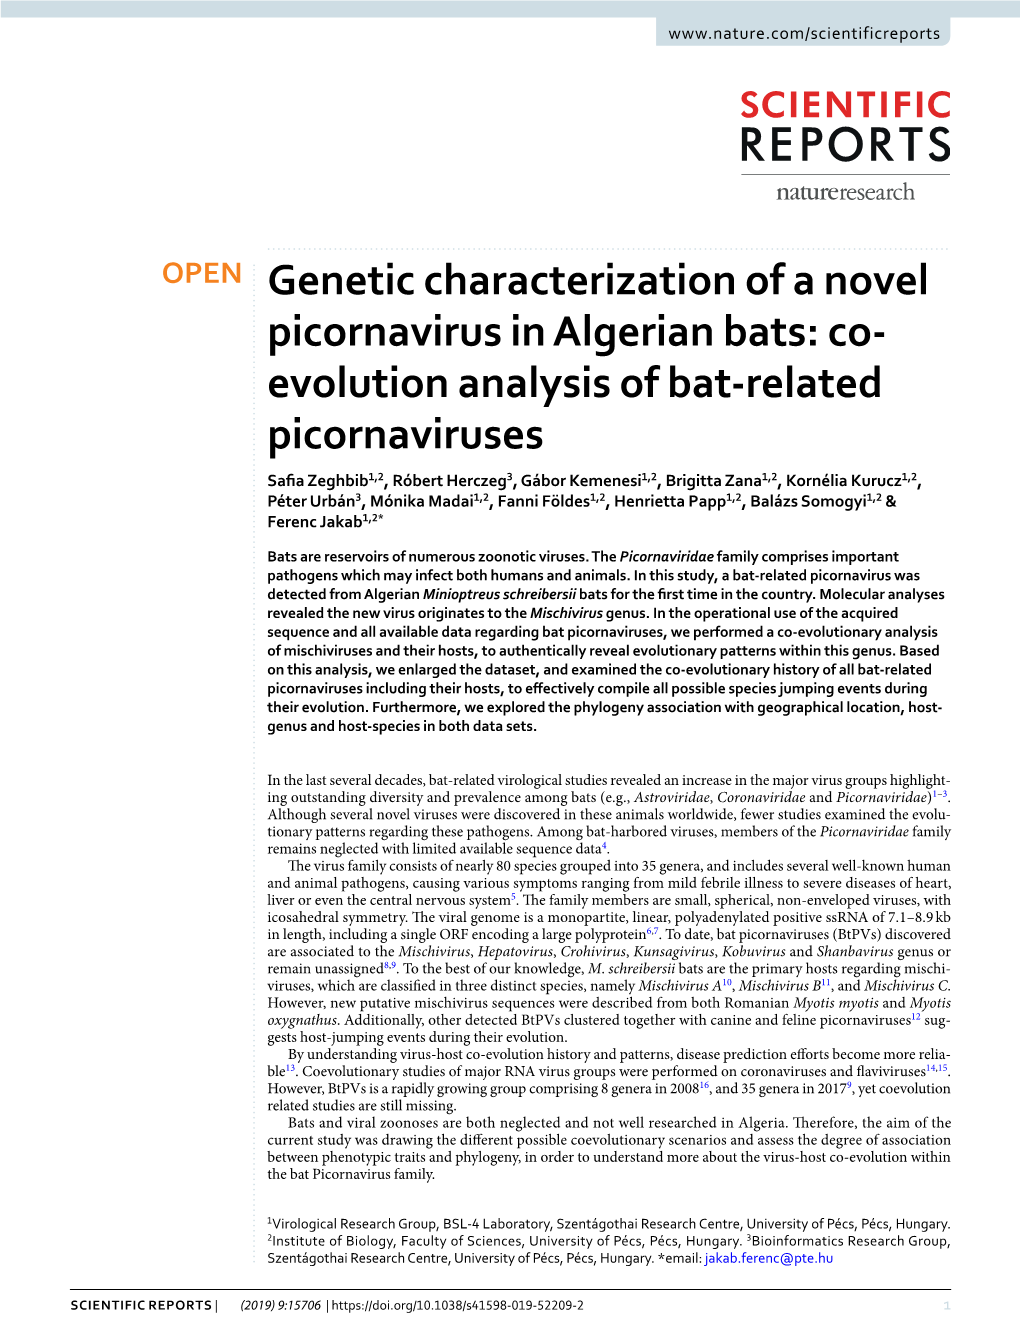 Genetic Characterization of a Novel